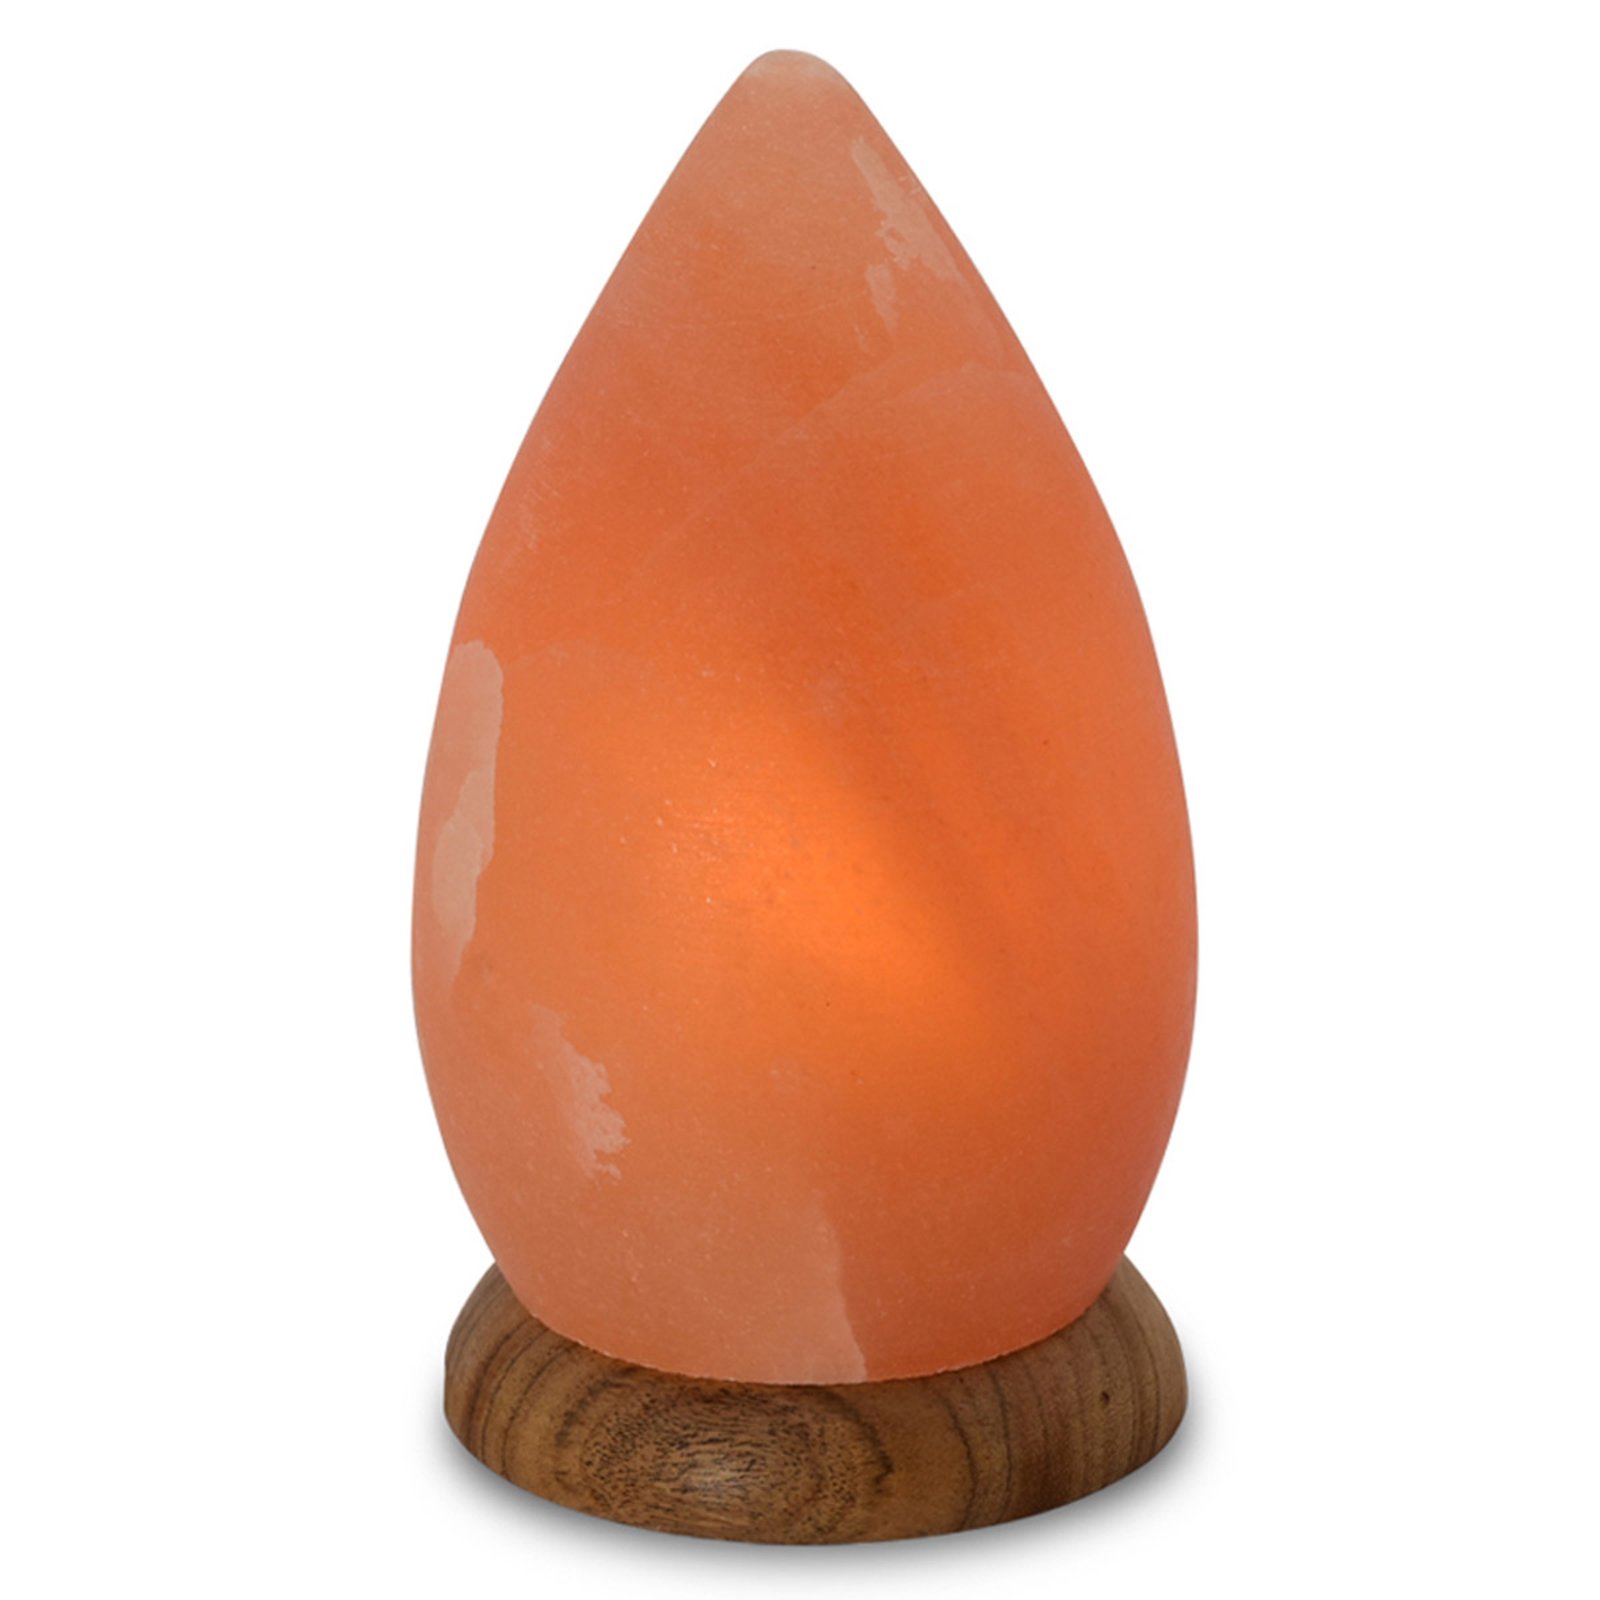 Salt lamp drops with base/plinth, amber